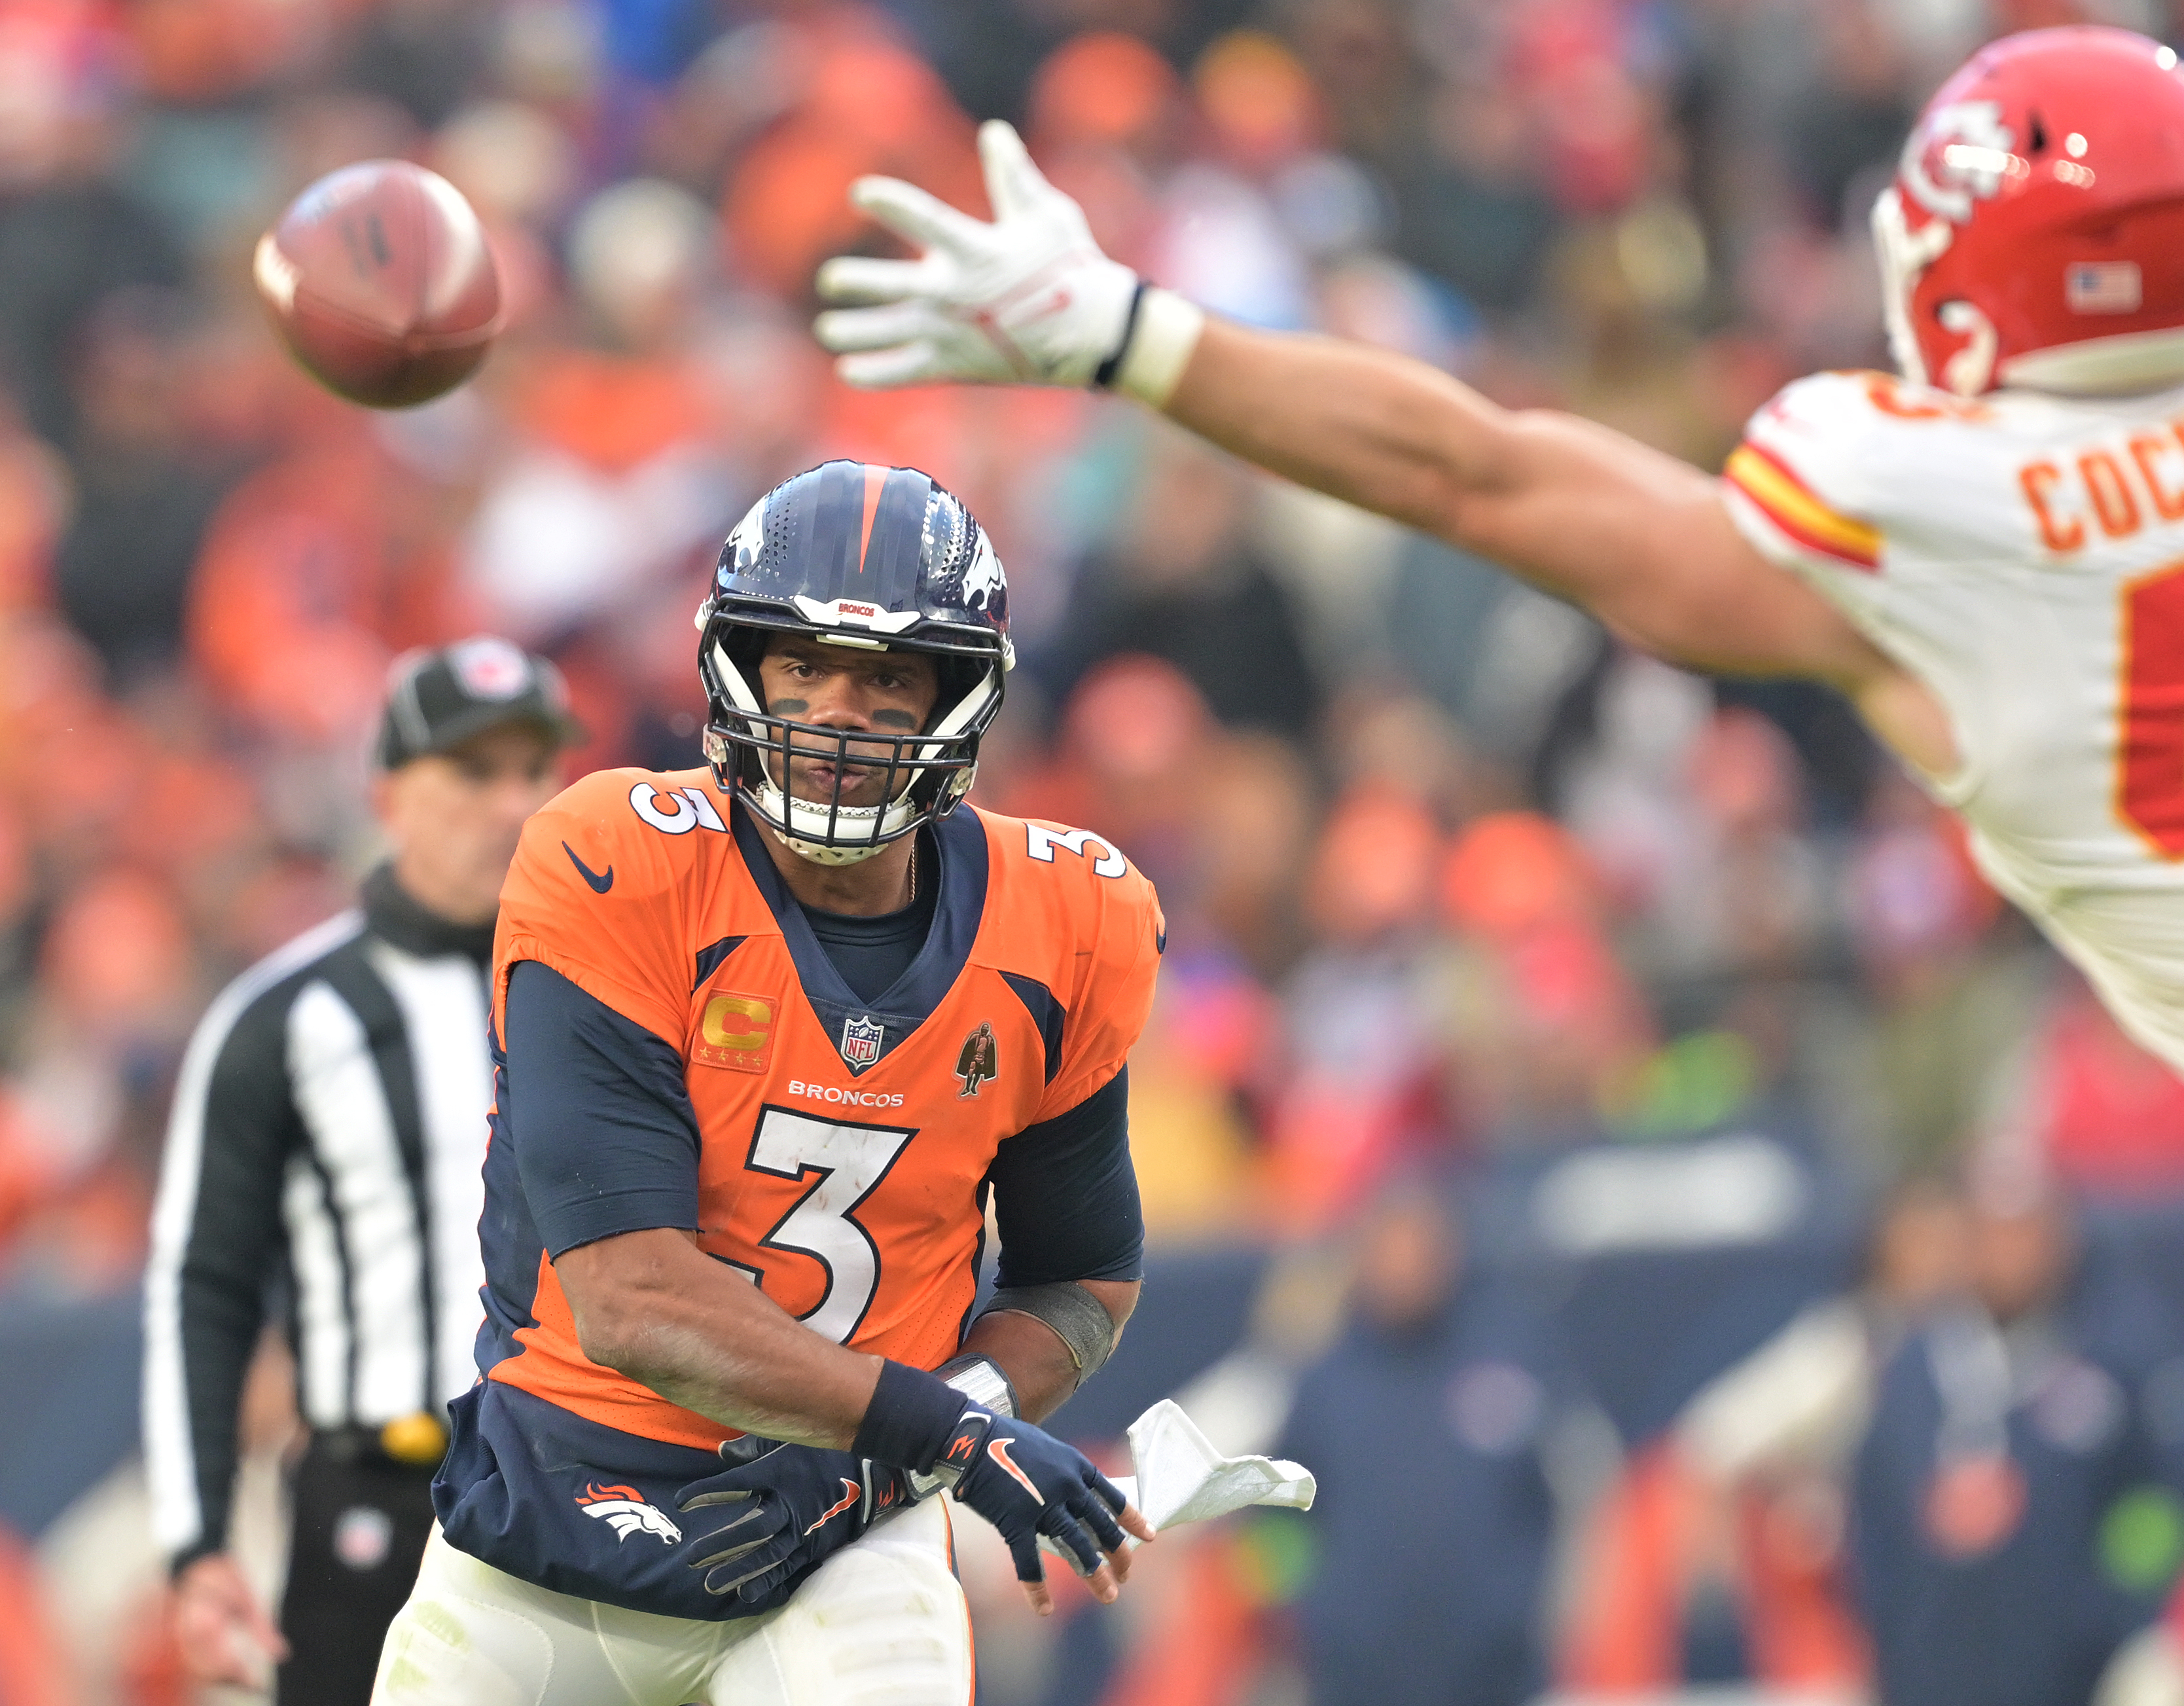 The Denver Broncos taking on the Kansas City Chiefs during week 8 of the NFL regular season